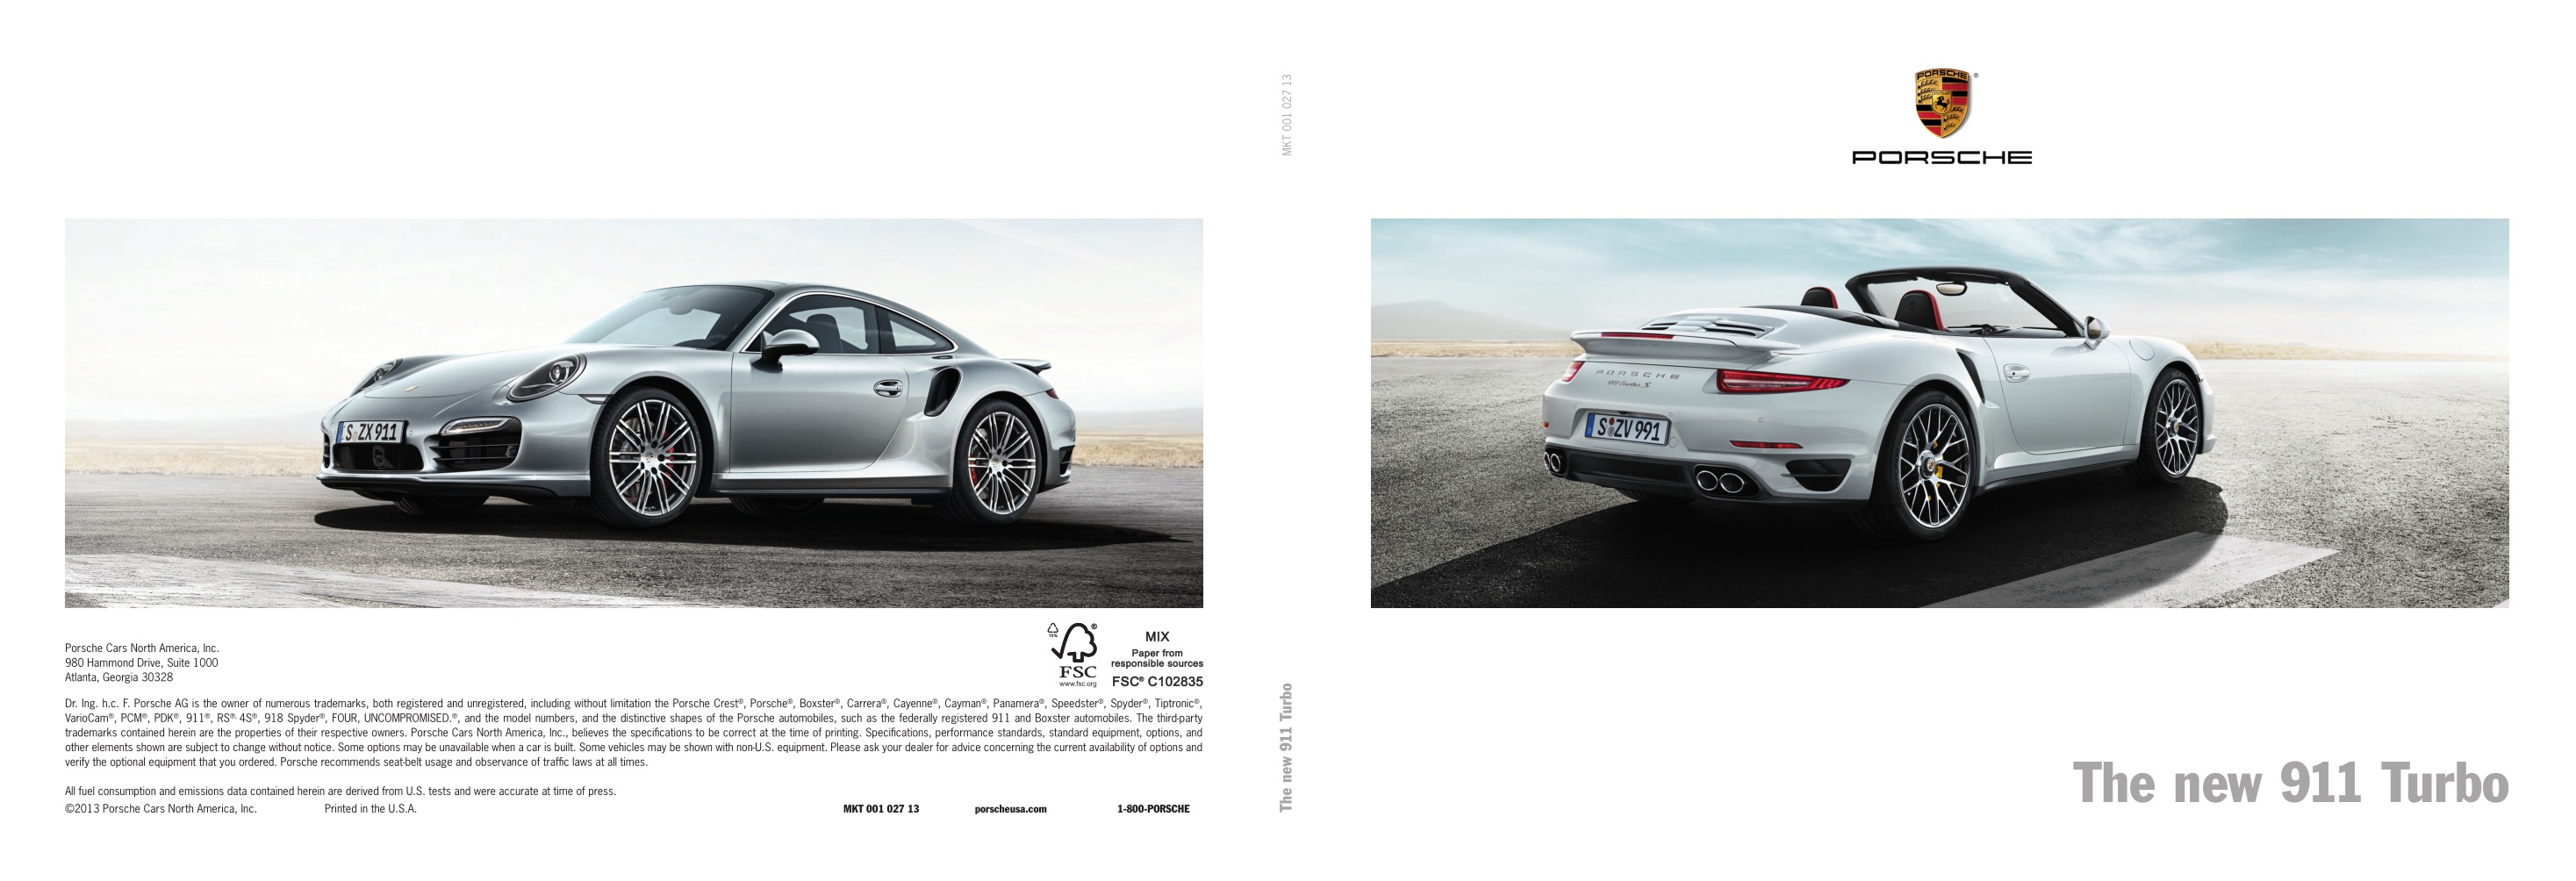 2014 Porsche 911 Turbo Brochure Page 15